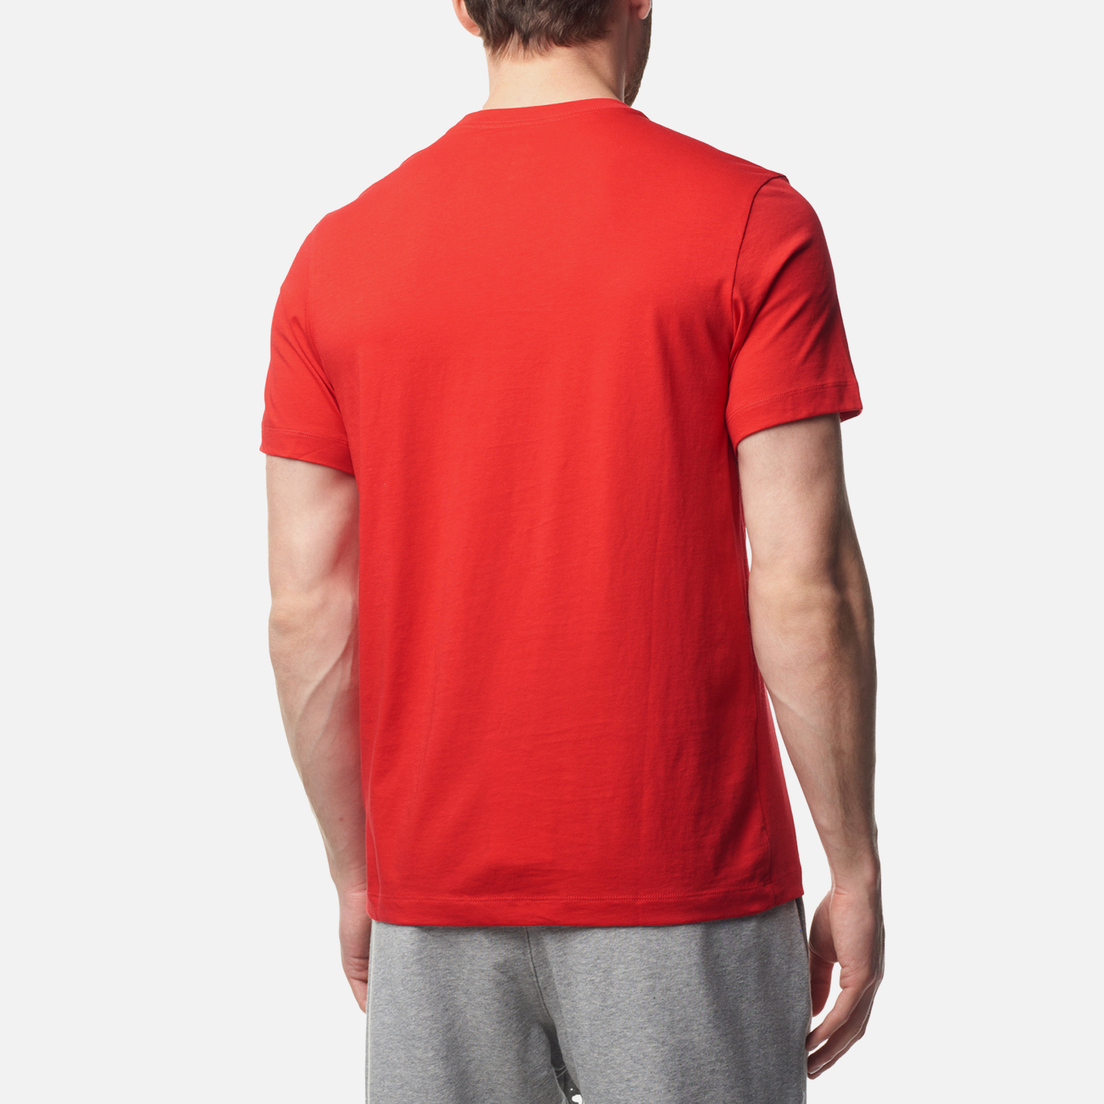 Nike Мужская футболка 12MO Swoosh